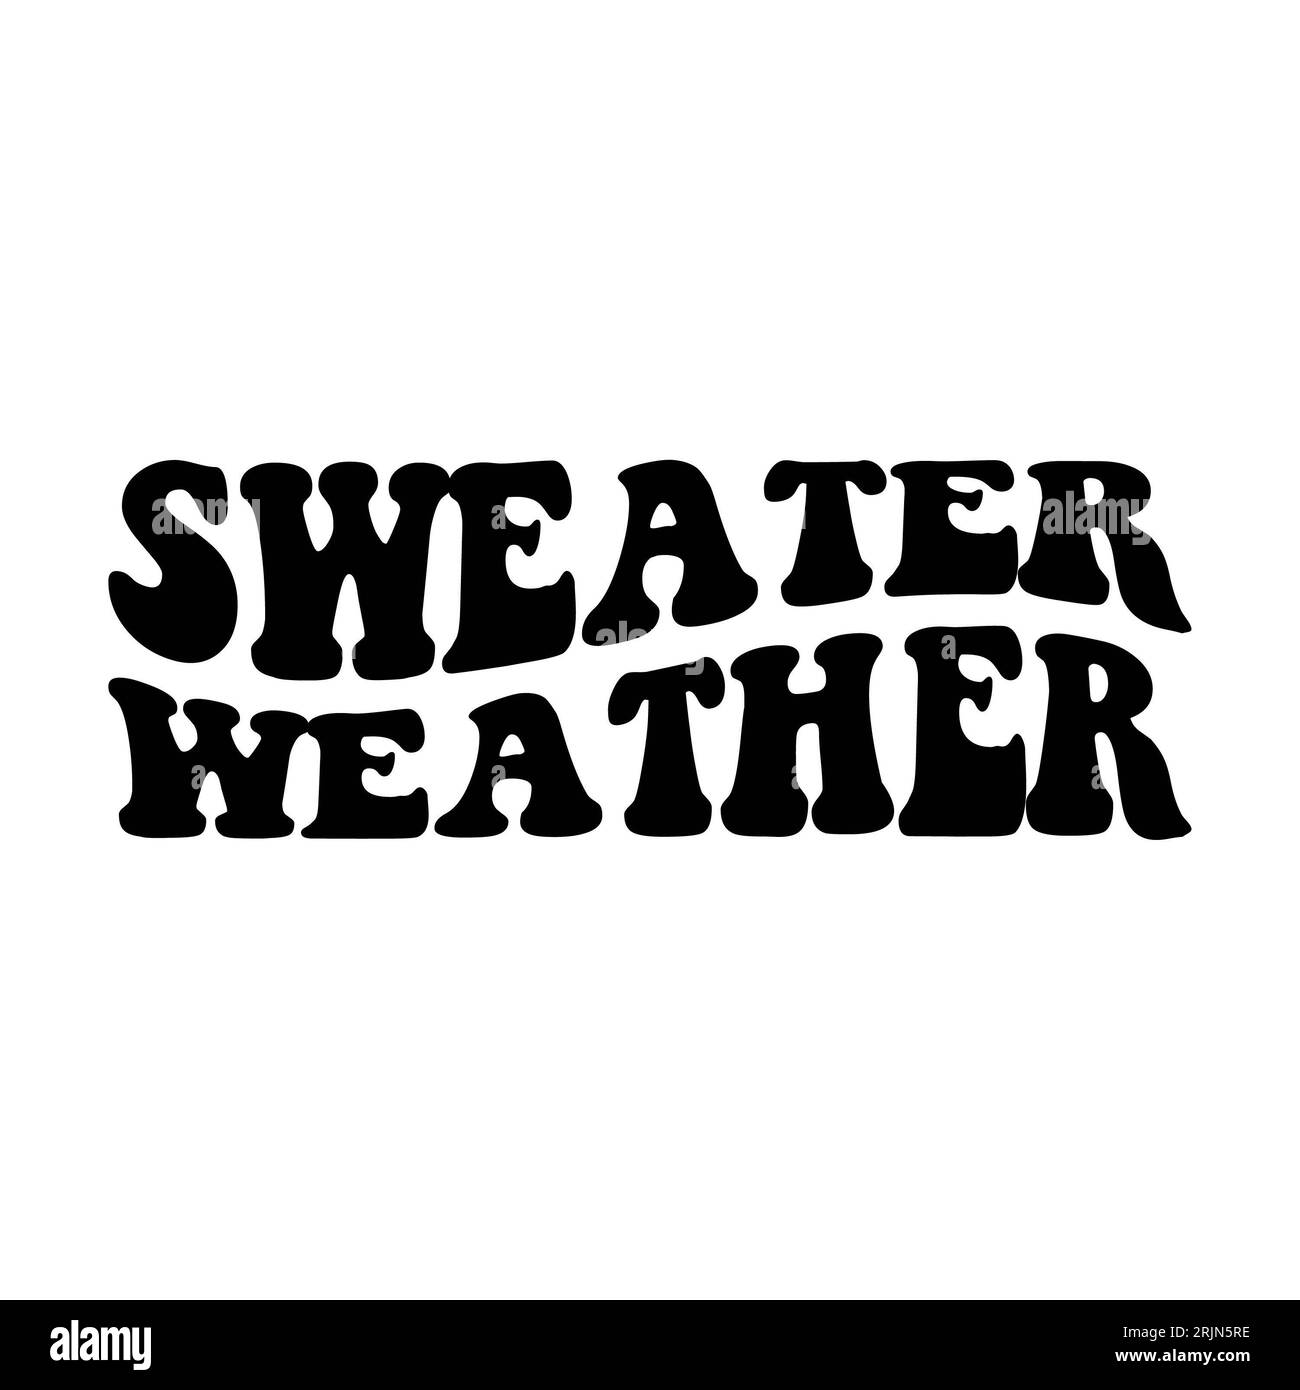 Sweater weather as wavy stacked on white background. Isolated illustration. Stock Photo